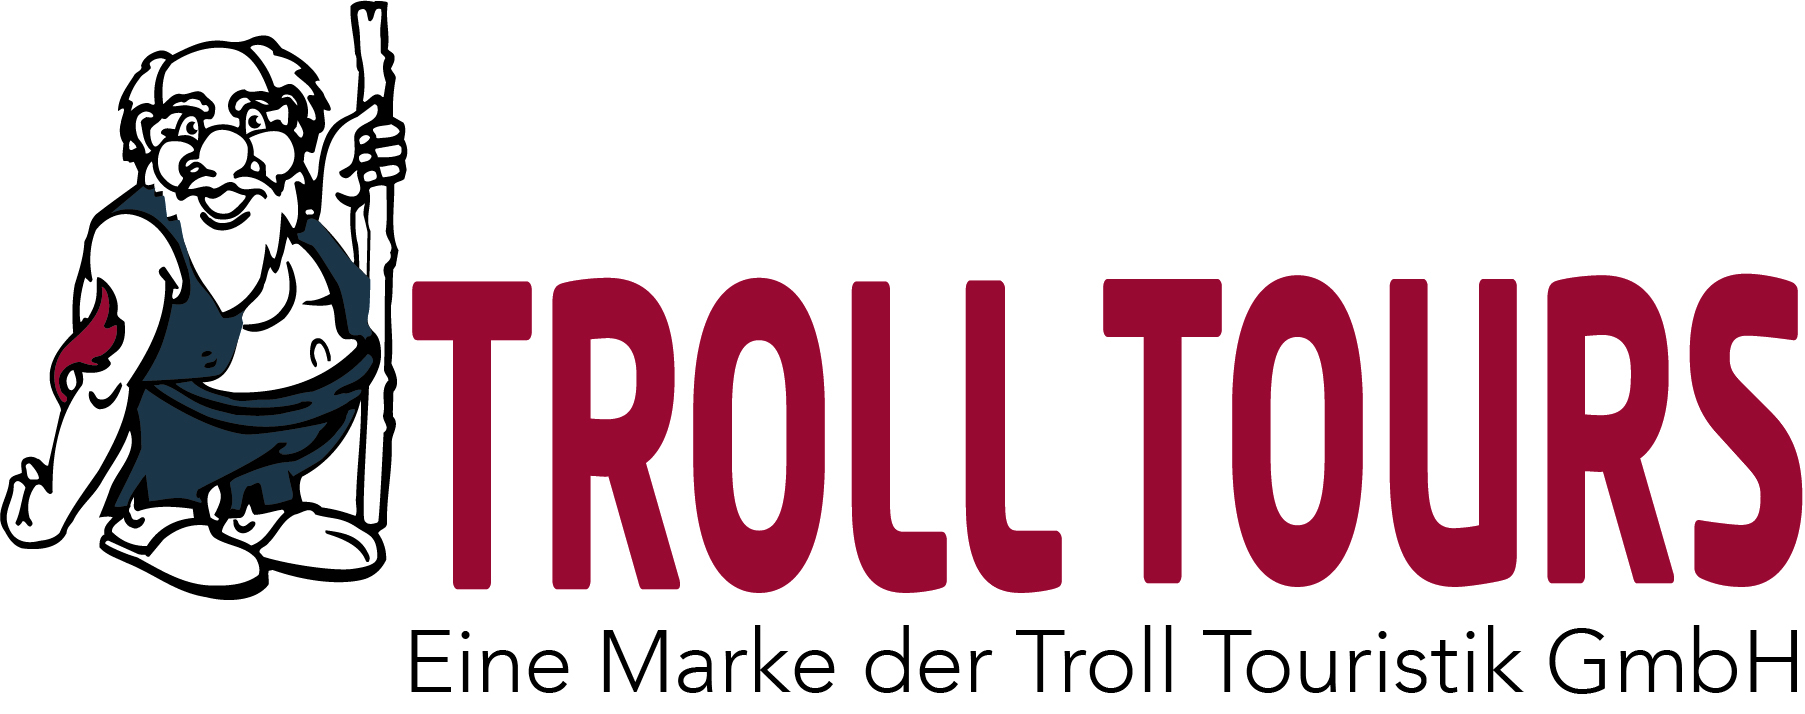 Troll Tours - eine Marke der Troll Touristik GmbH